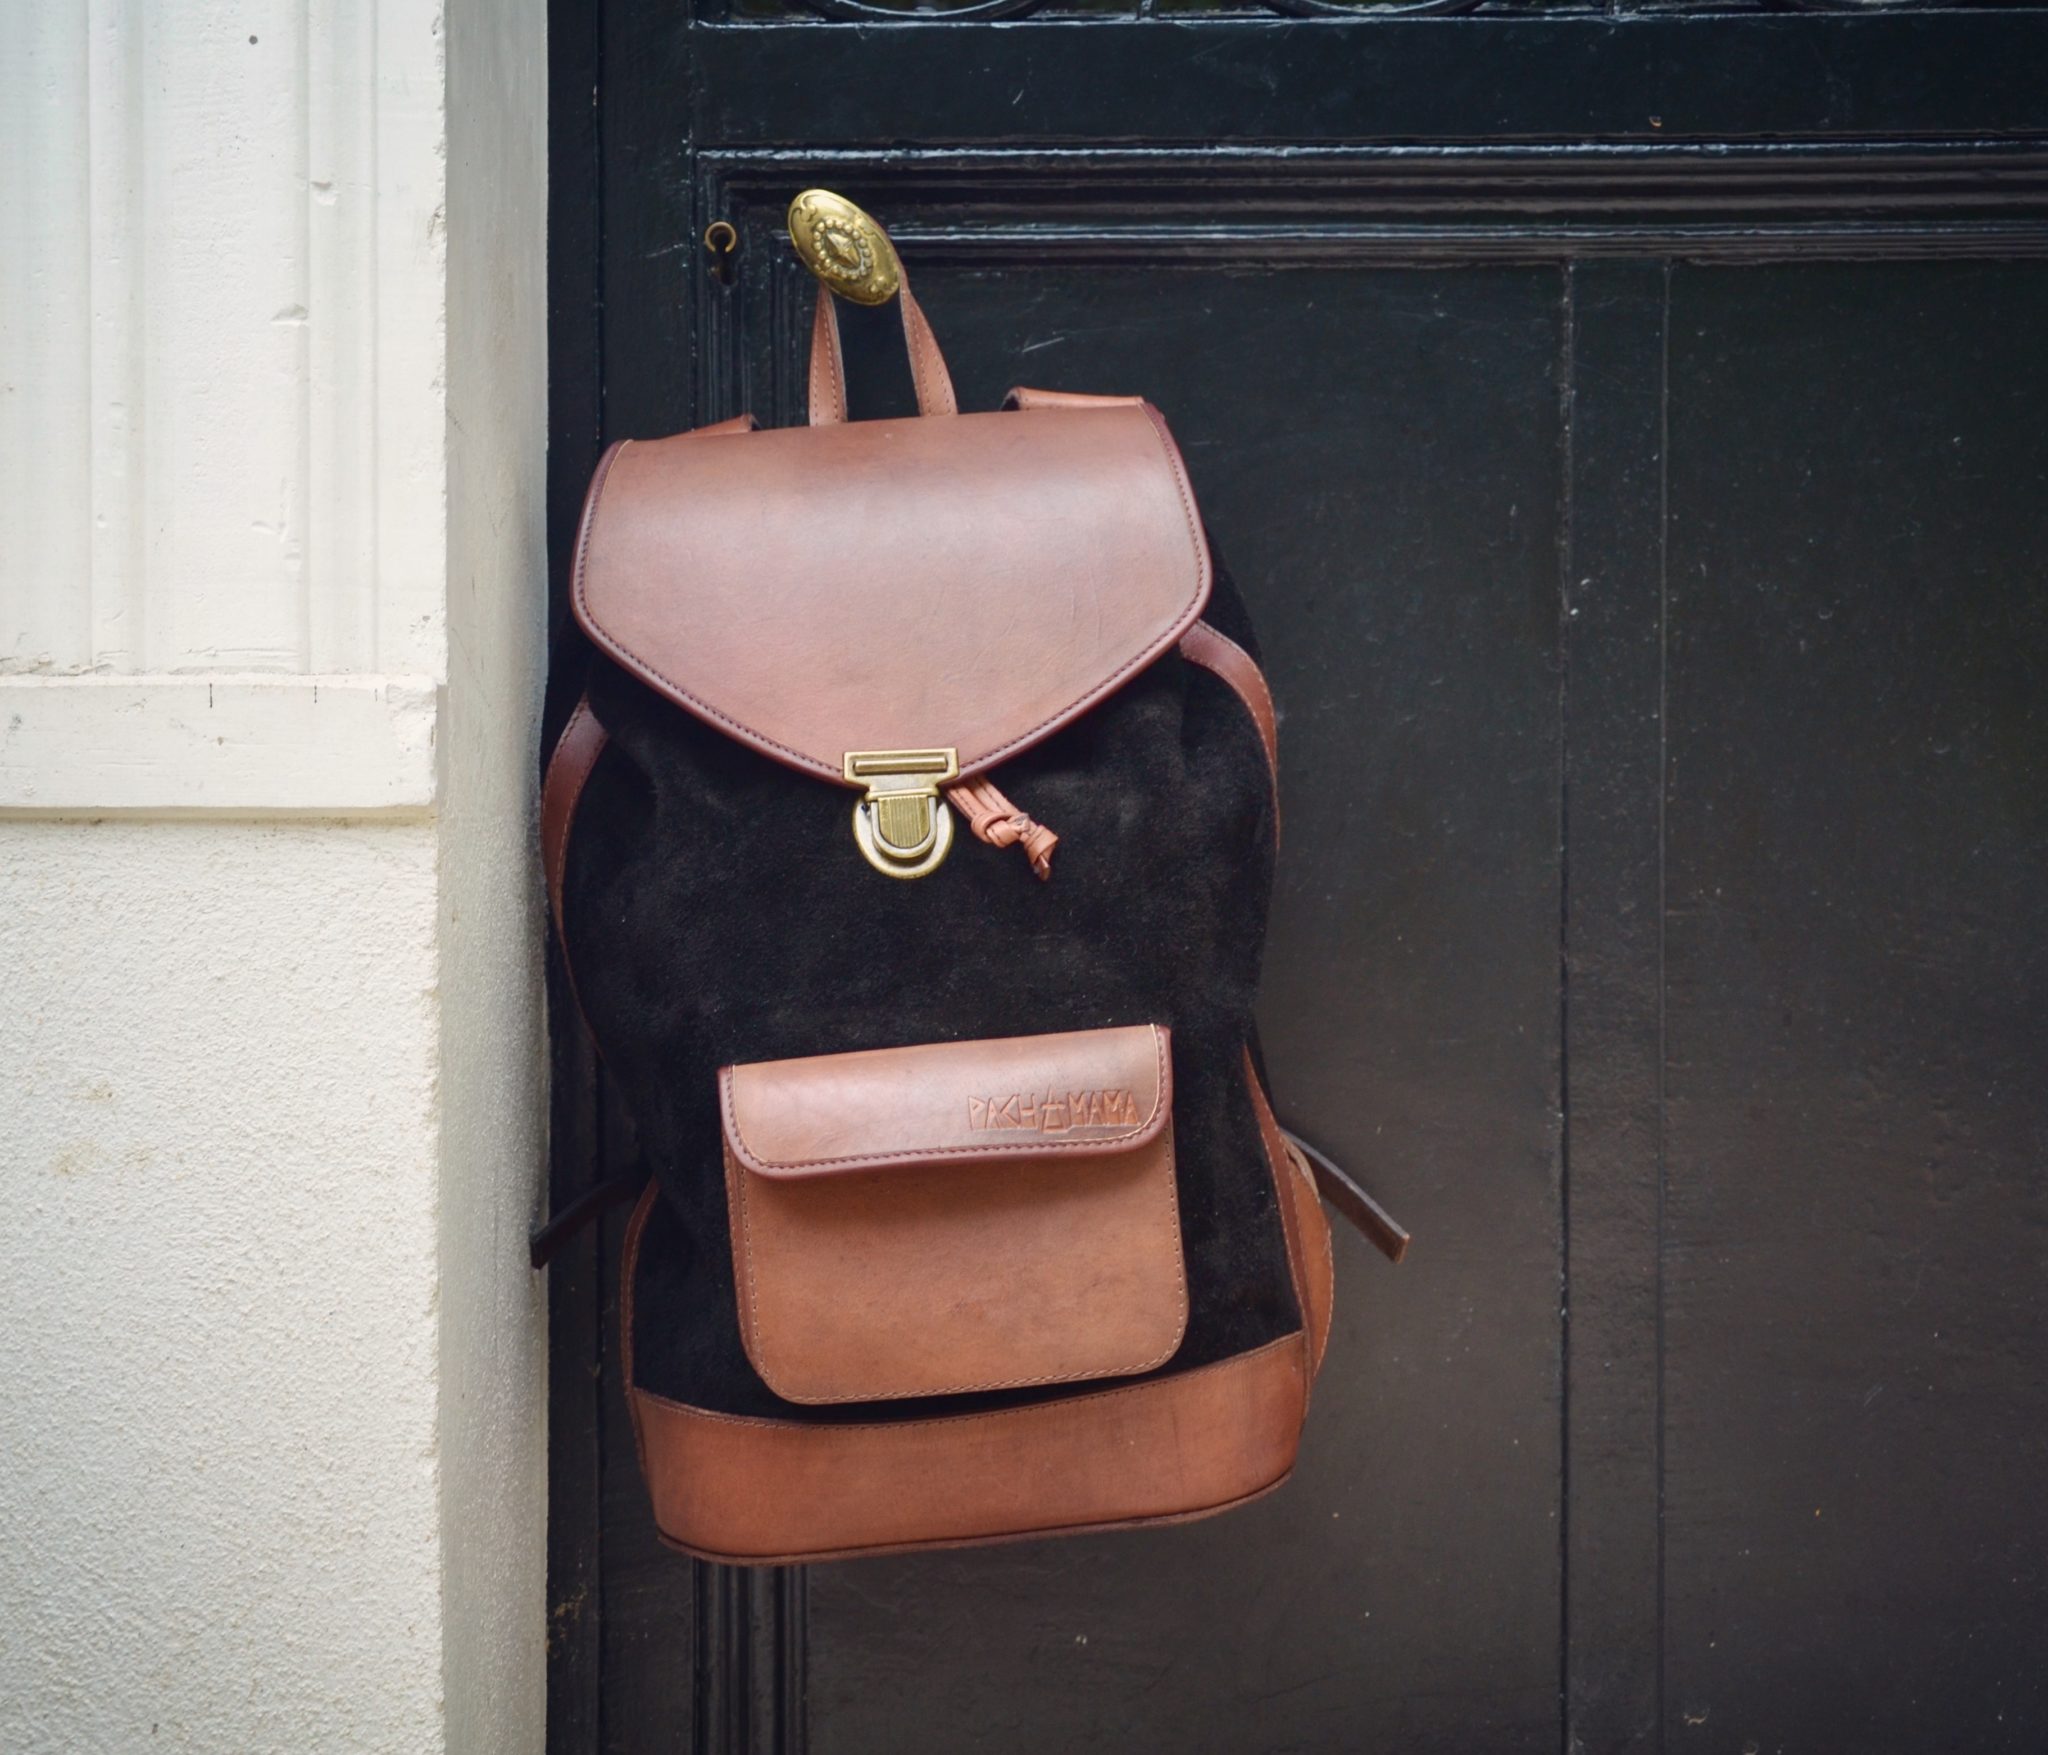 Vintage backpack - Pachamama